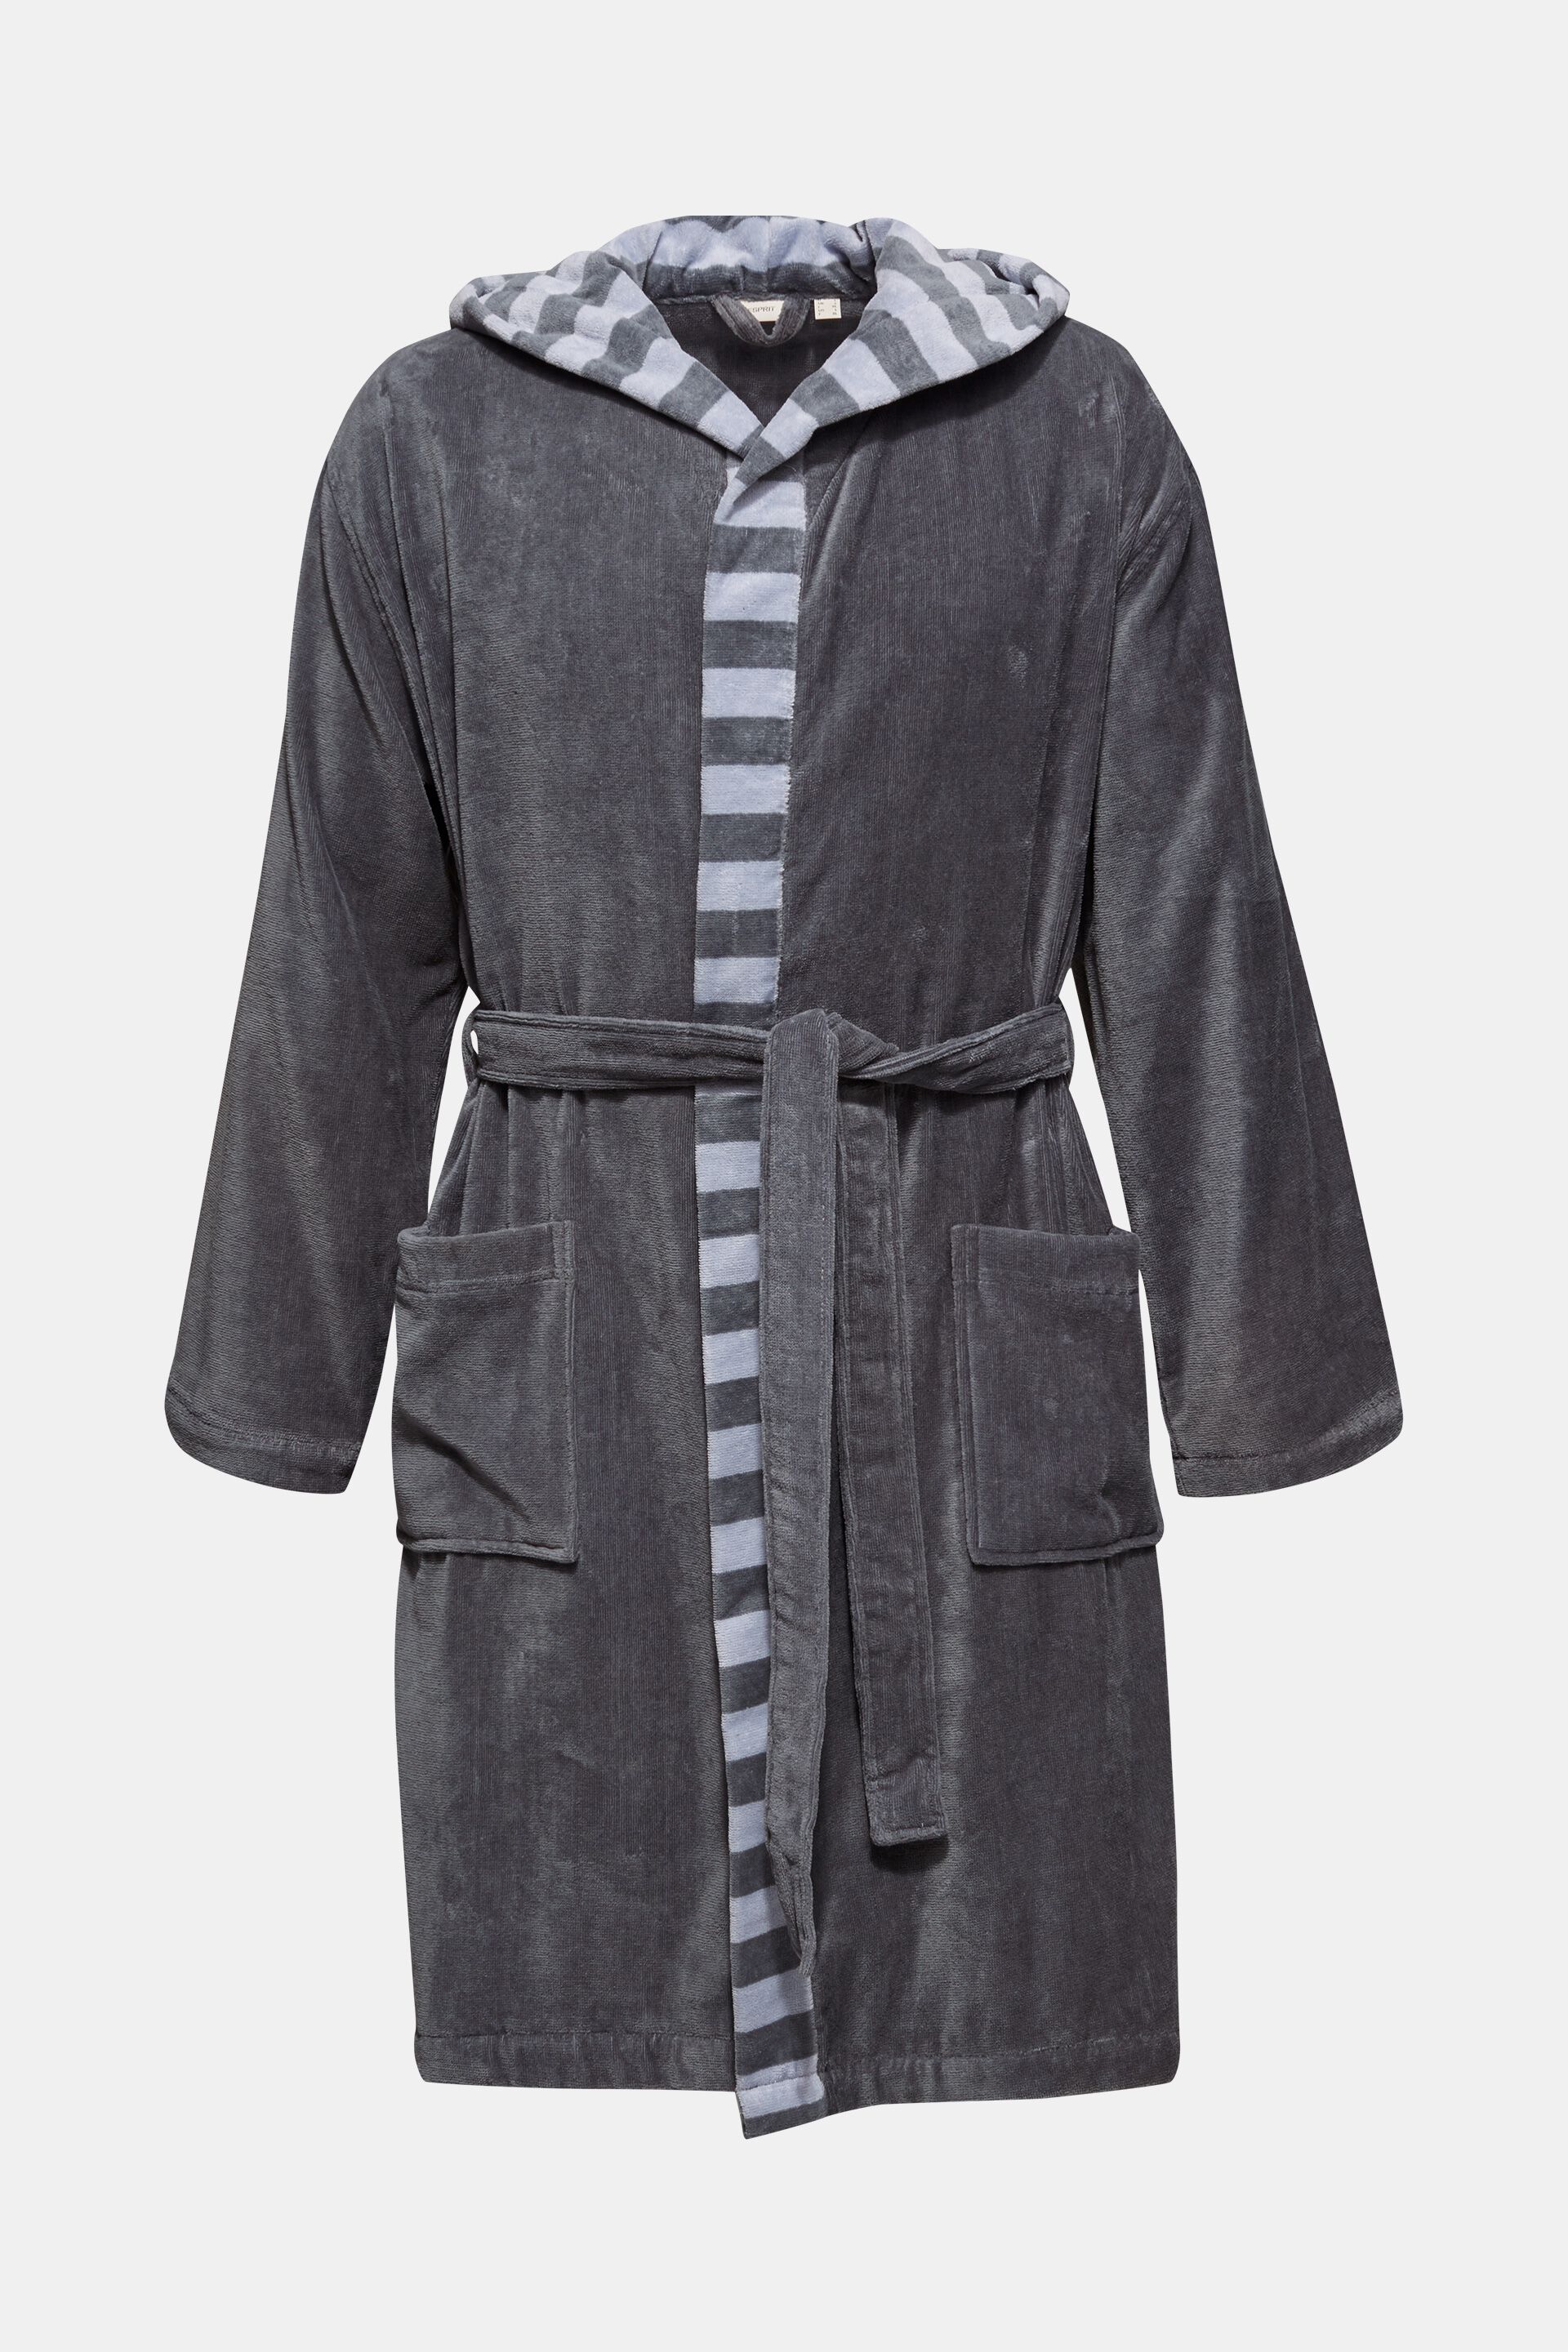 Esprit Sale Mens striped bathrobe, 100% cotton